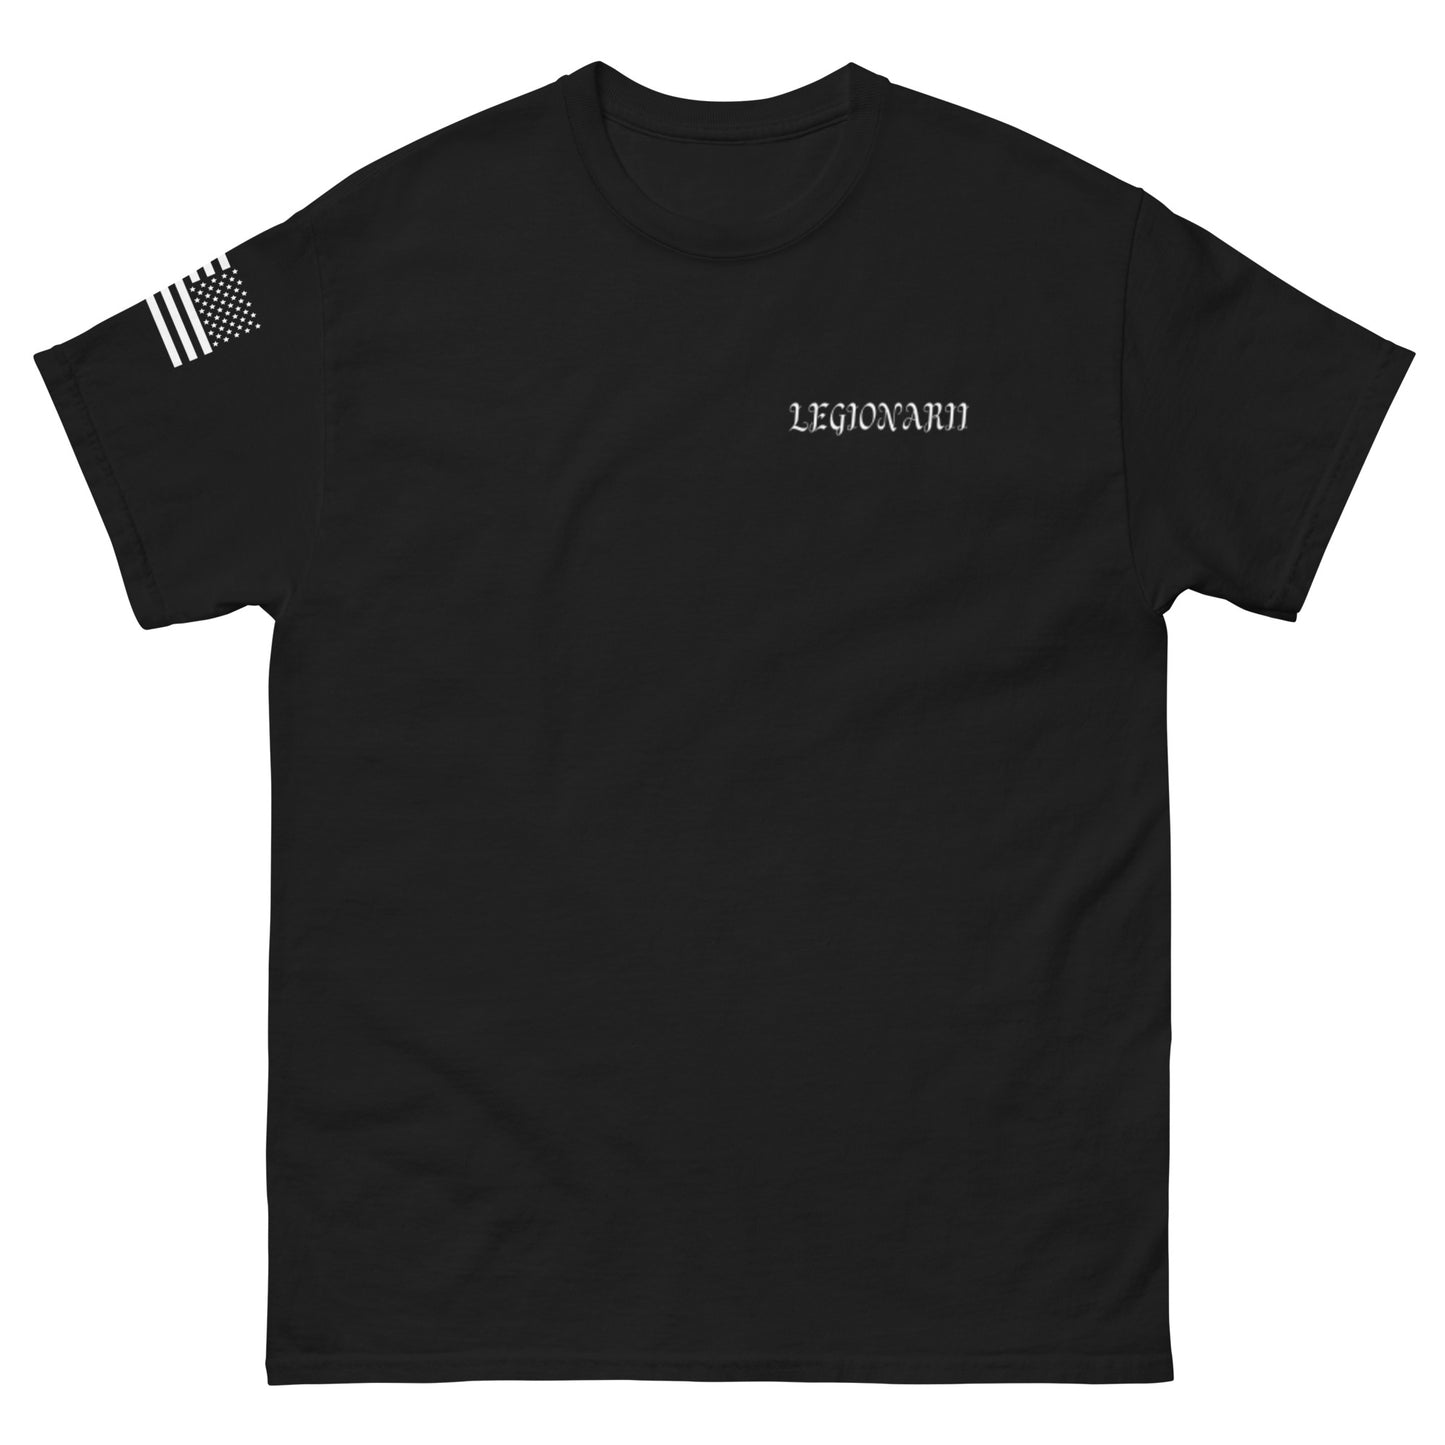 Festina Lente - Legionarii T-Shirt